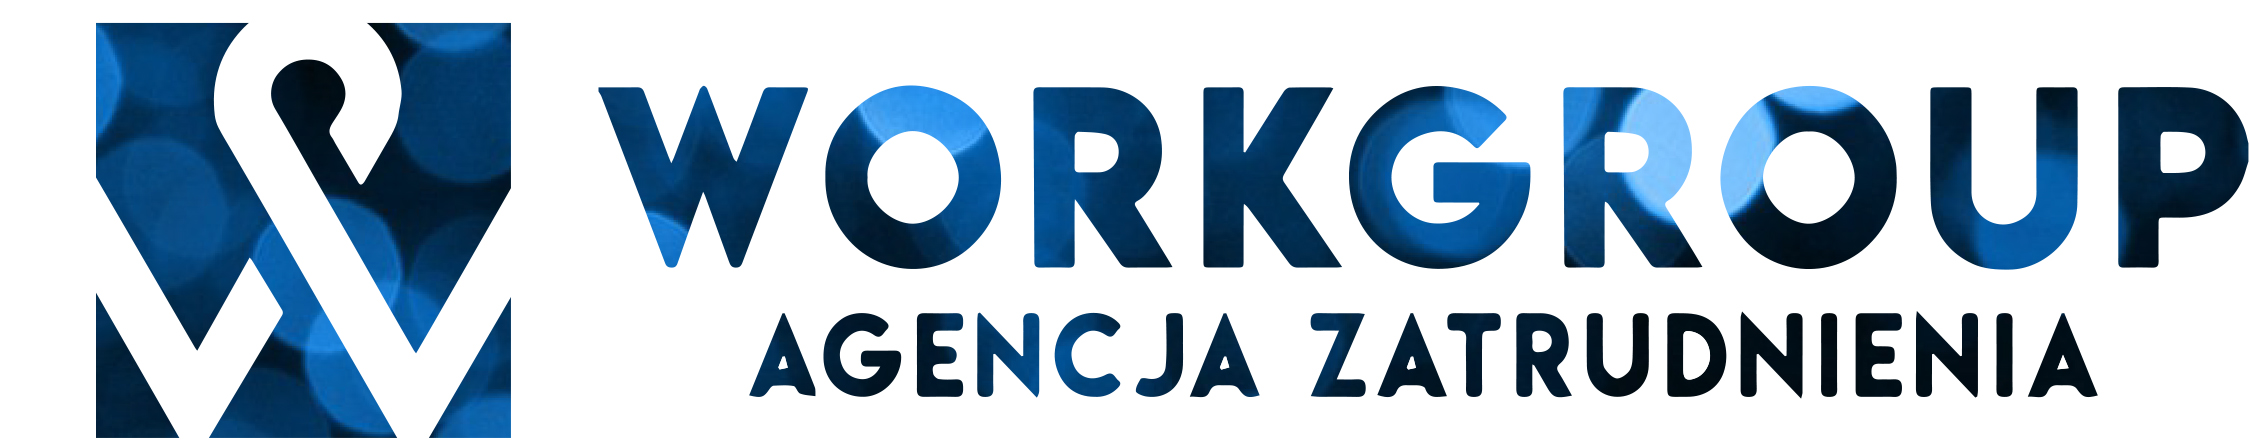 workgroup logo